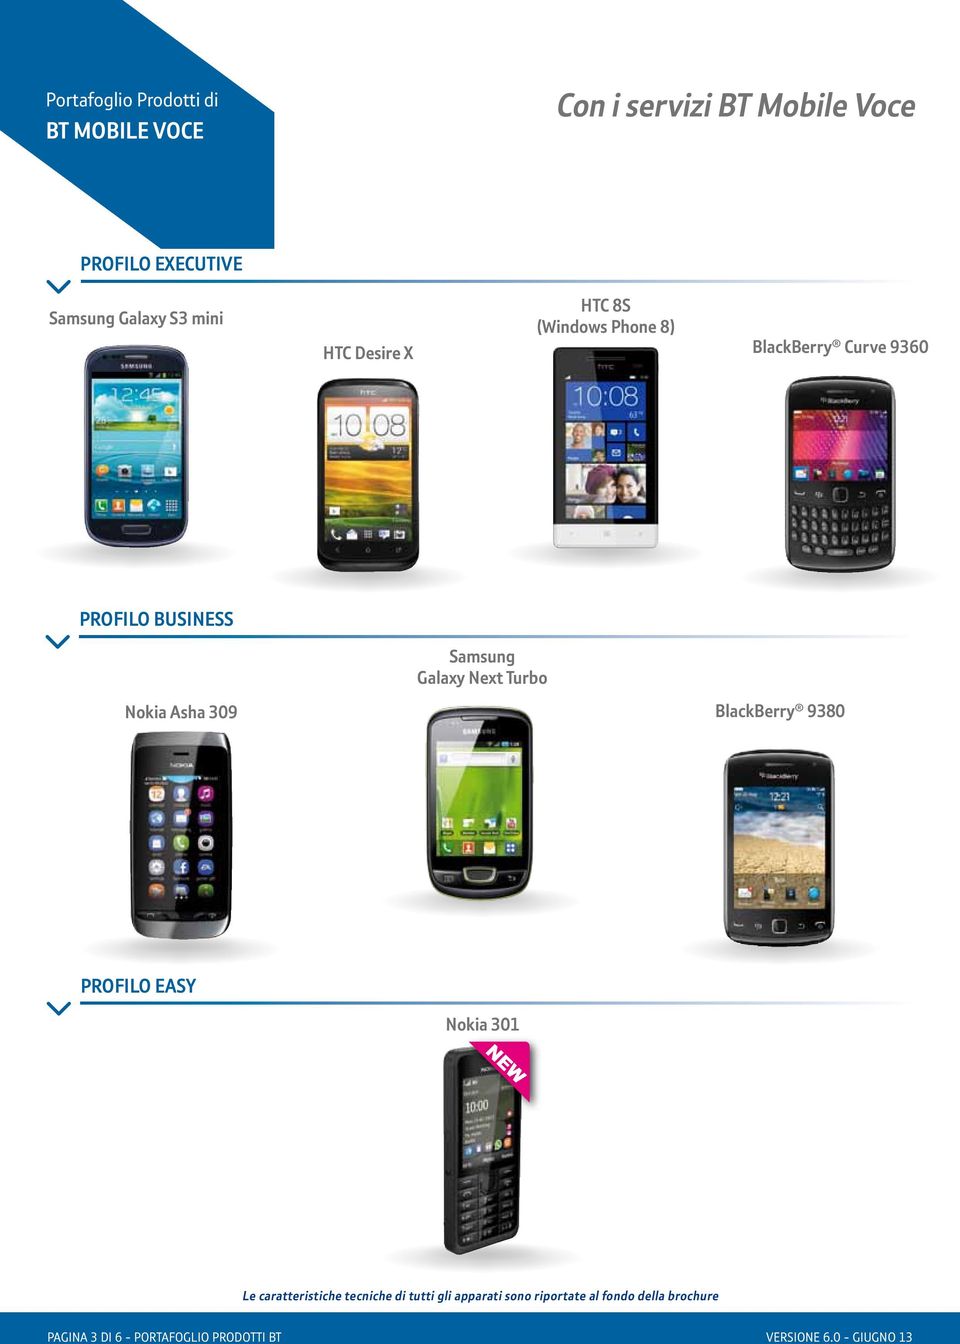 Samsung Galaxy Next Turbo Nokia Asha 309 BlackBerry 9380 PROFILO EASY Nokia 301 Le caratteristiche